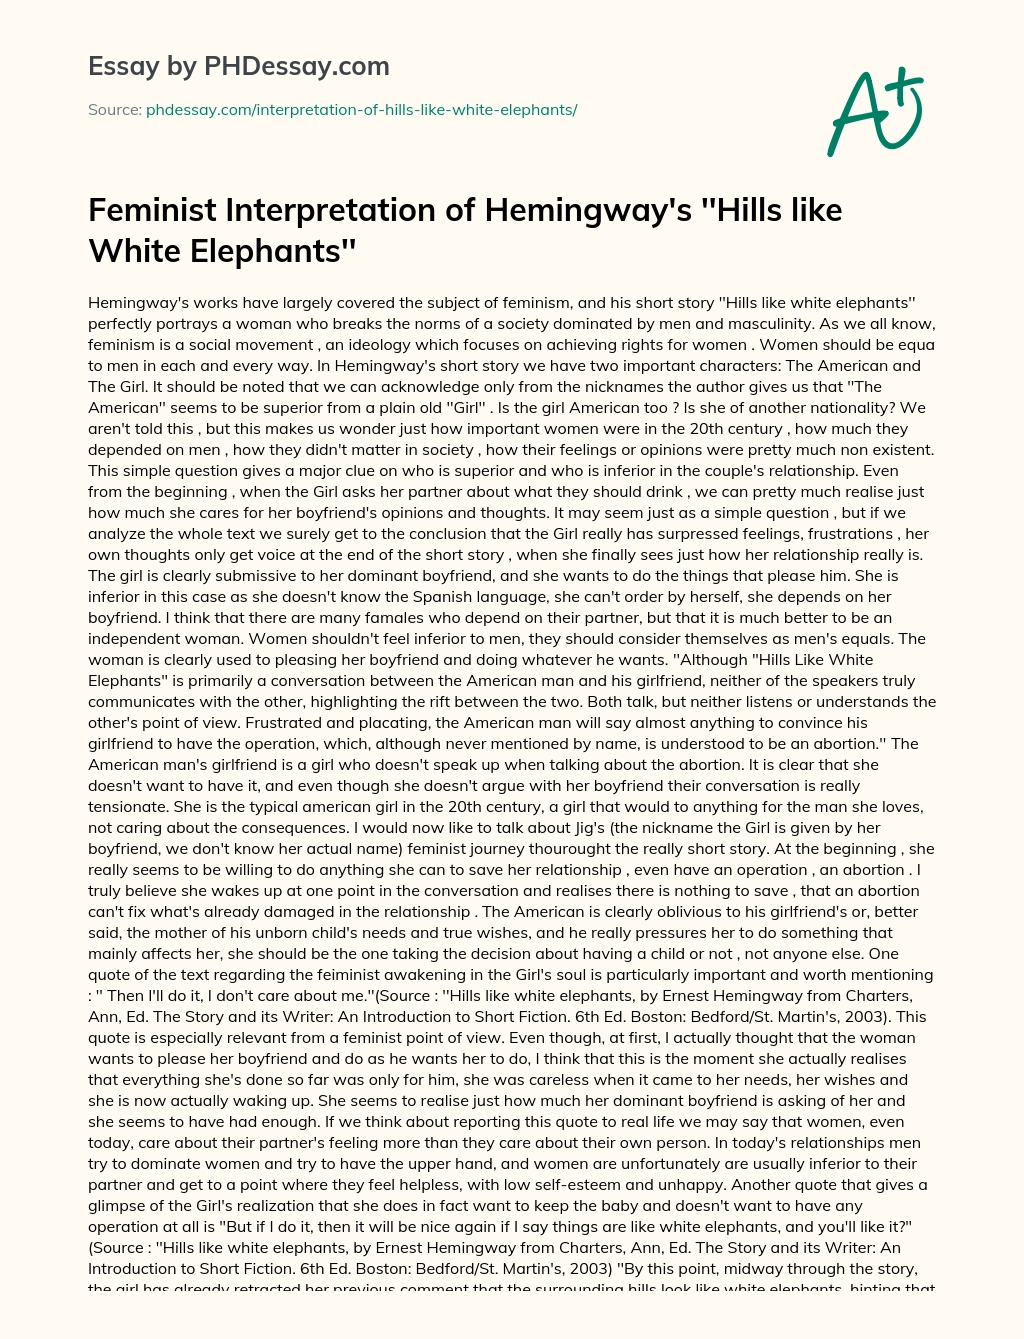 Feminist Interpretation of Hemingway’s ”Hills like White Elephants” essay